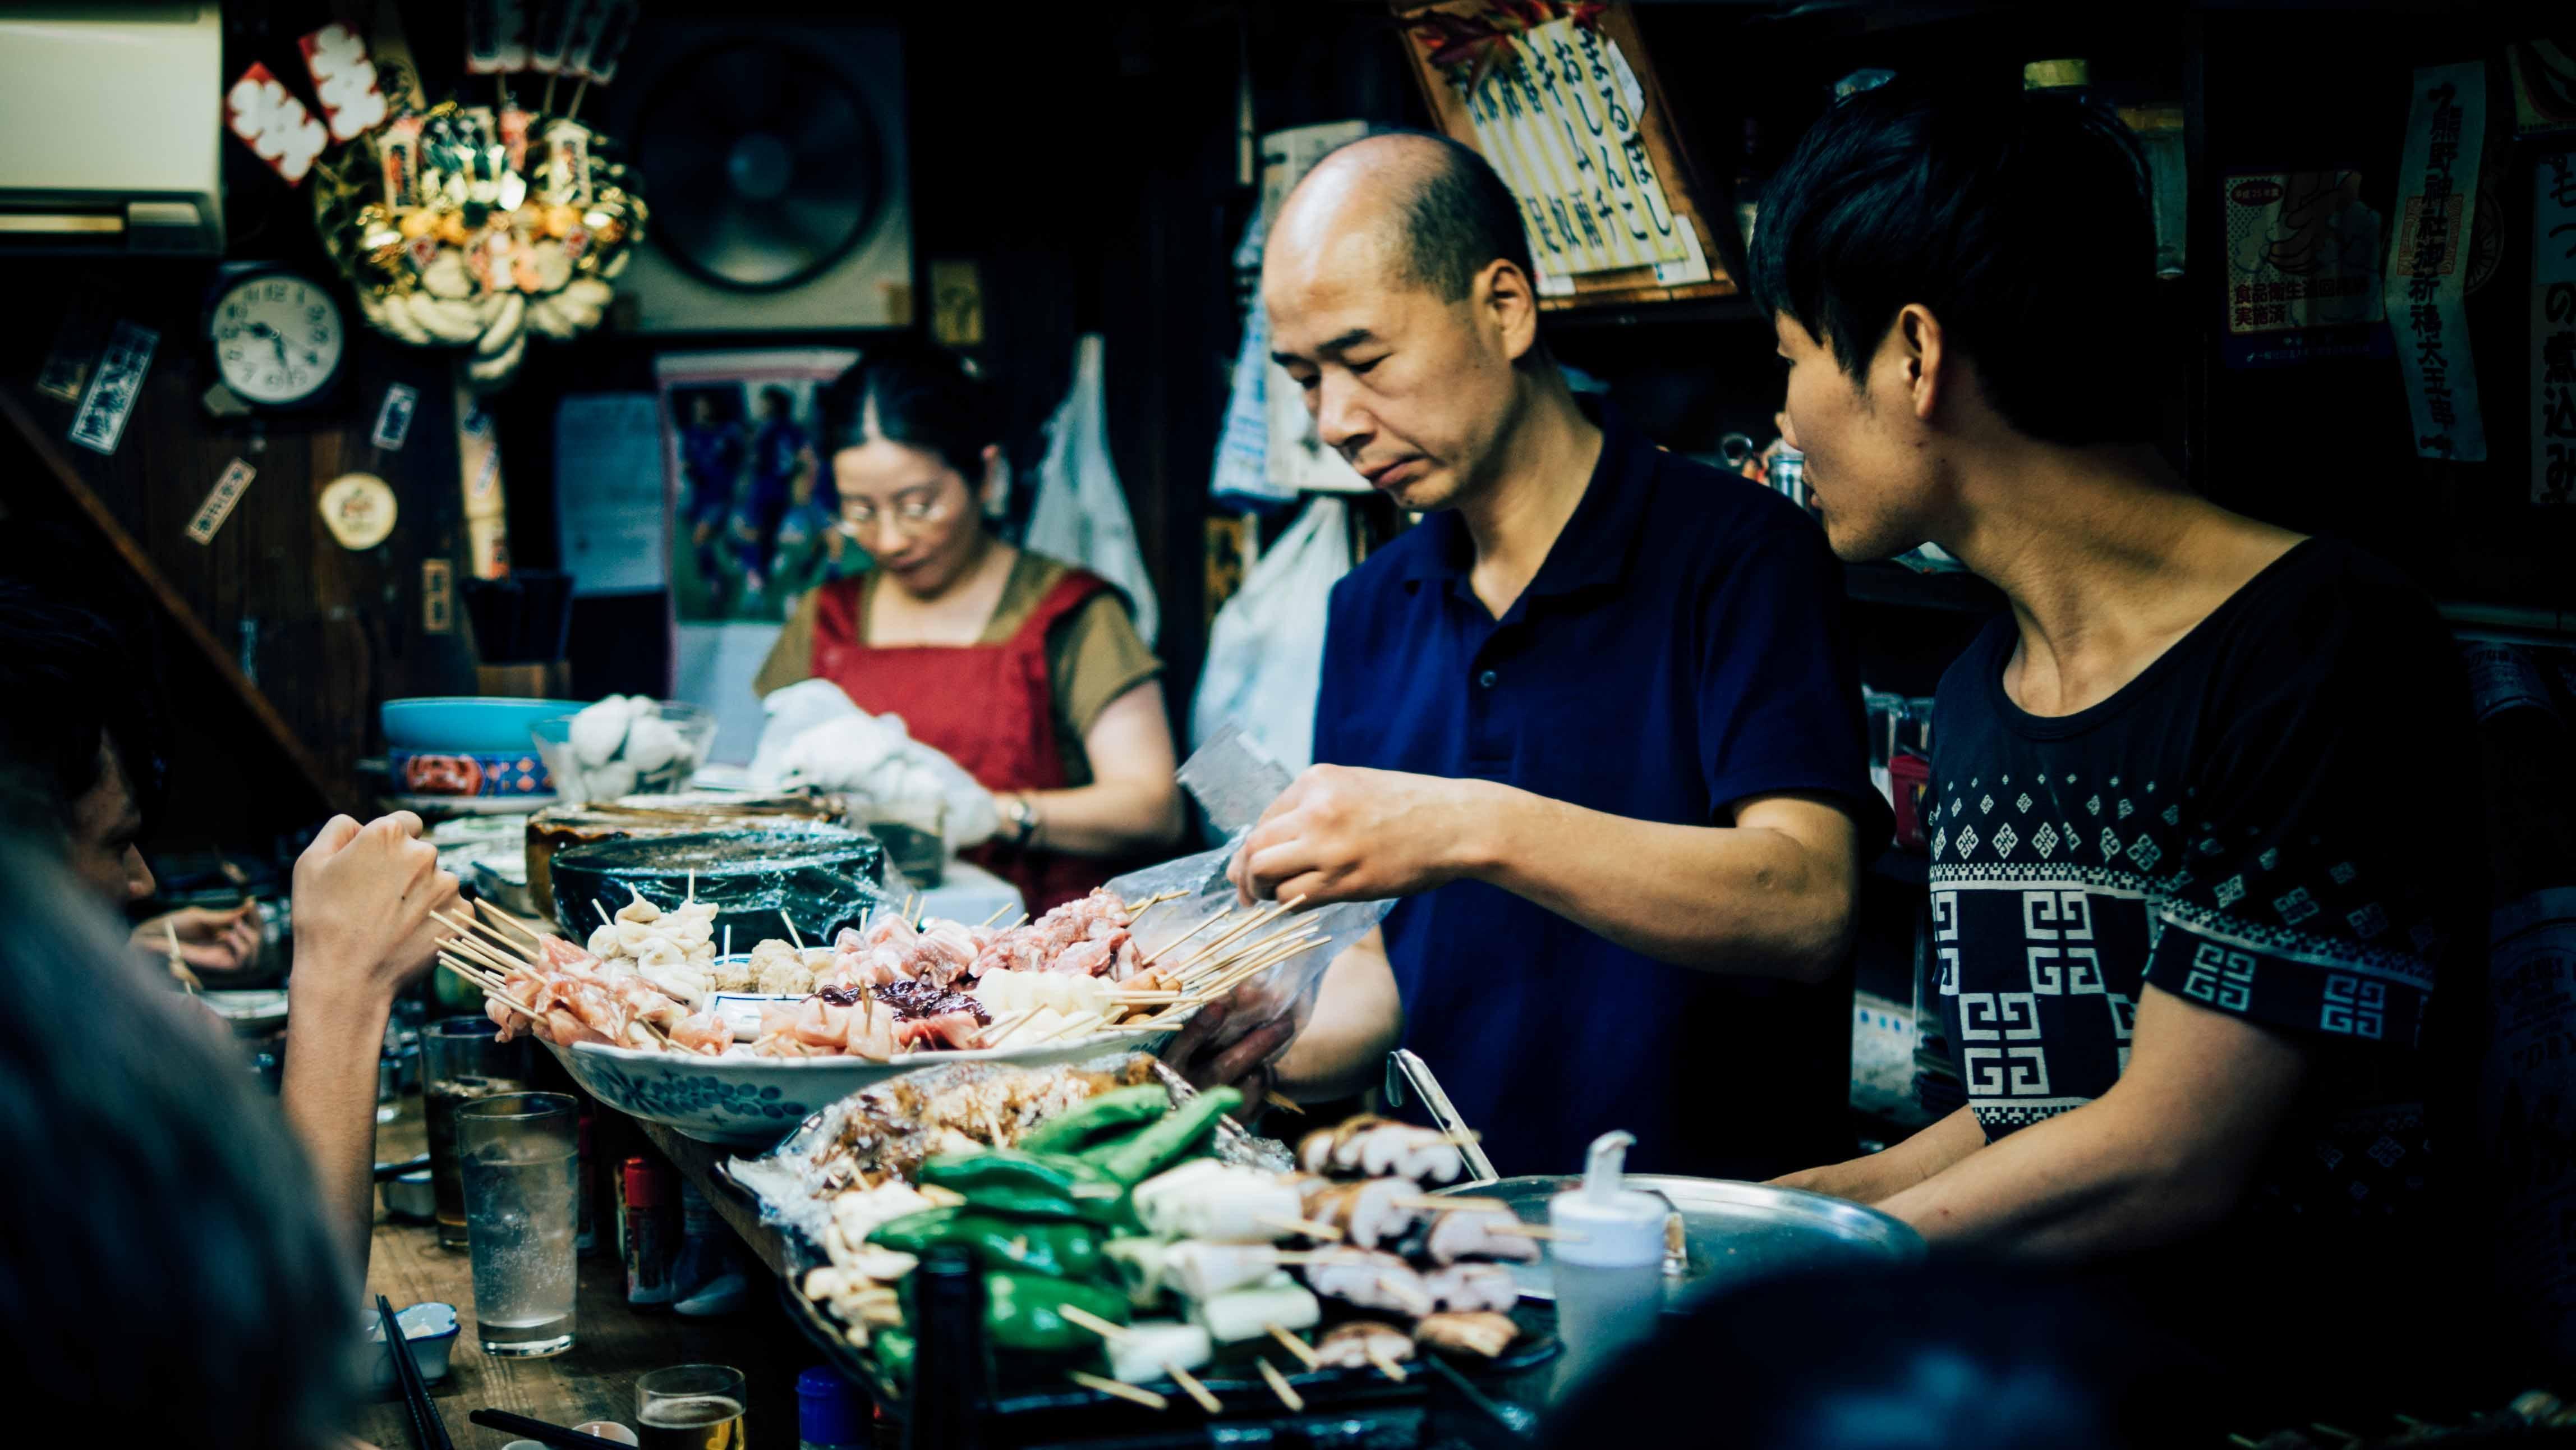 Un mercado de comida en China. Lan Pham on Unsplash